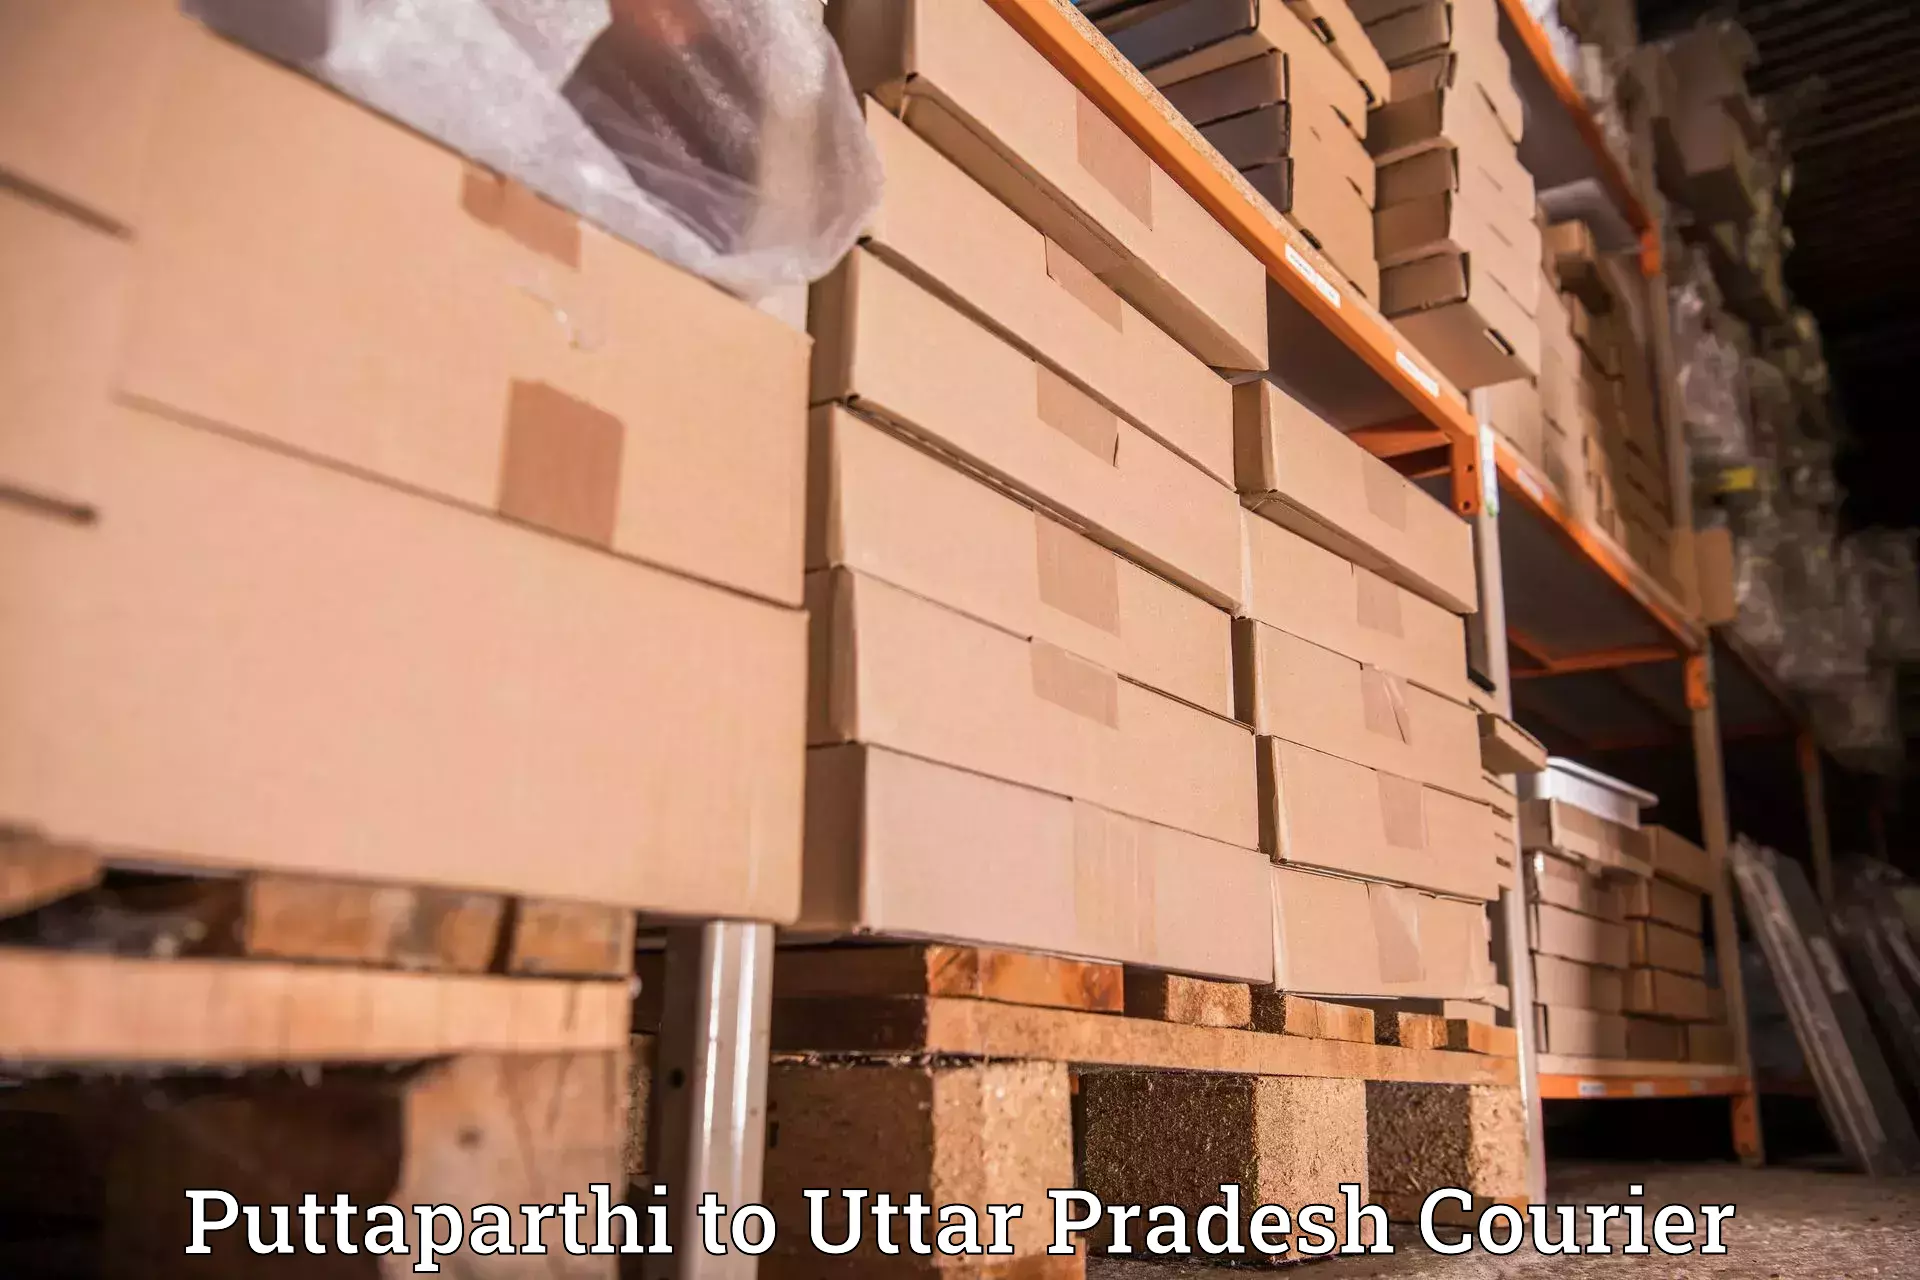 Logistics service provider Puttaparthi to Uttar Pradesh